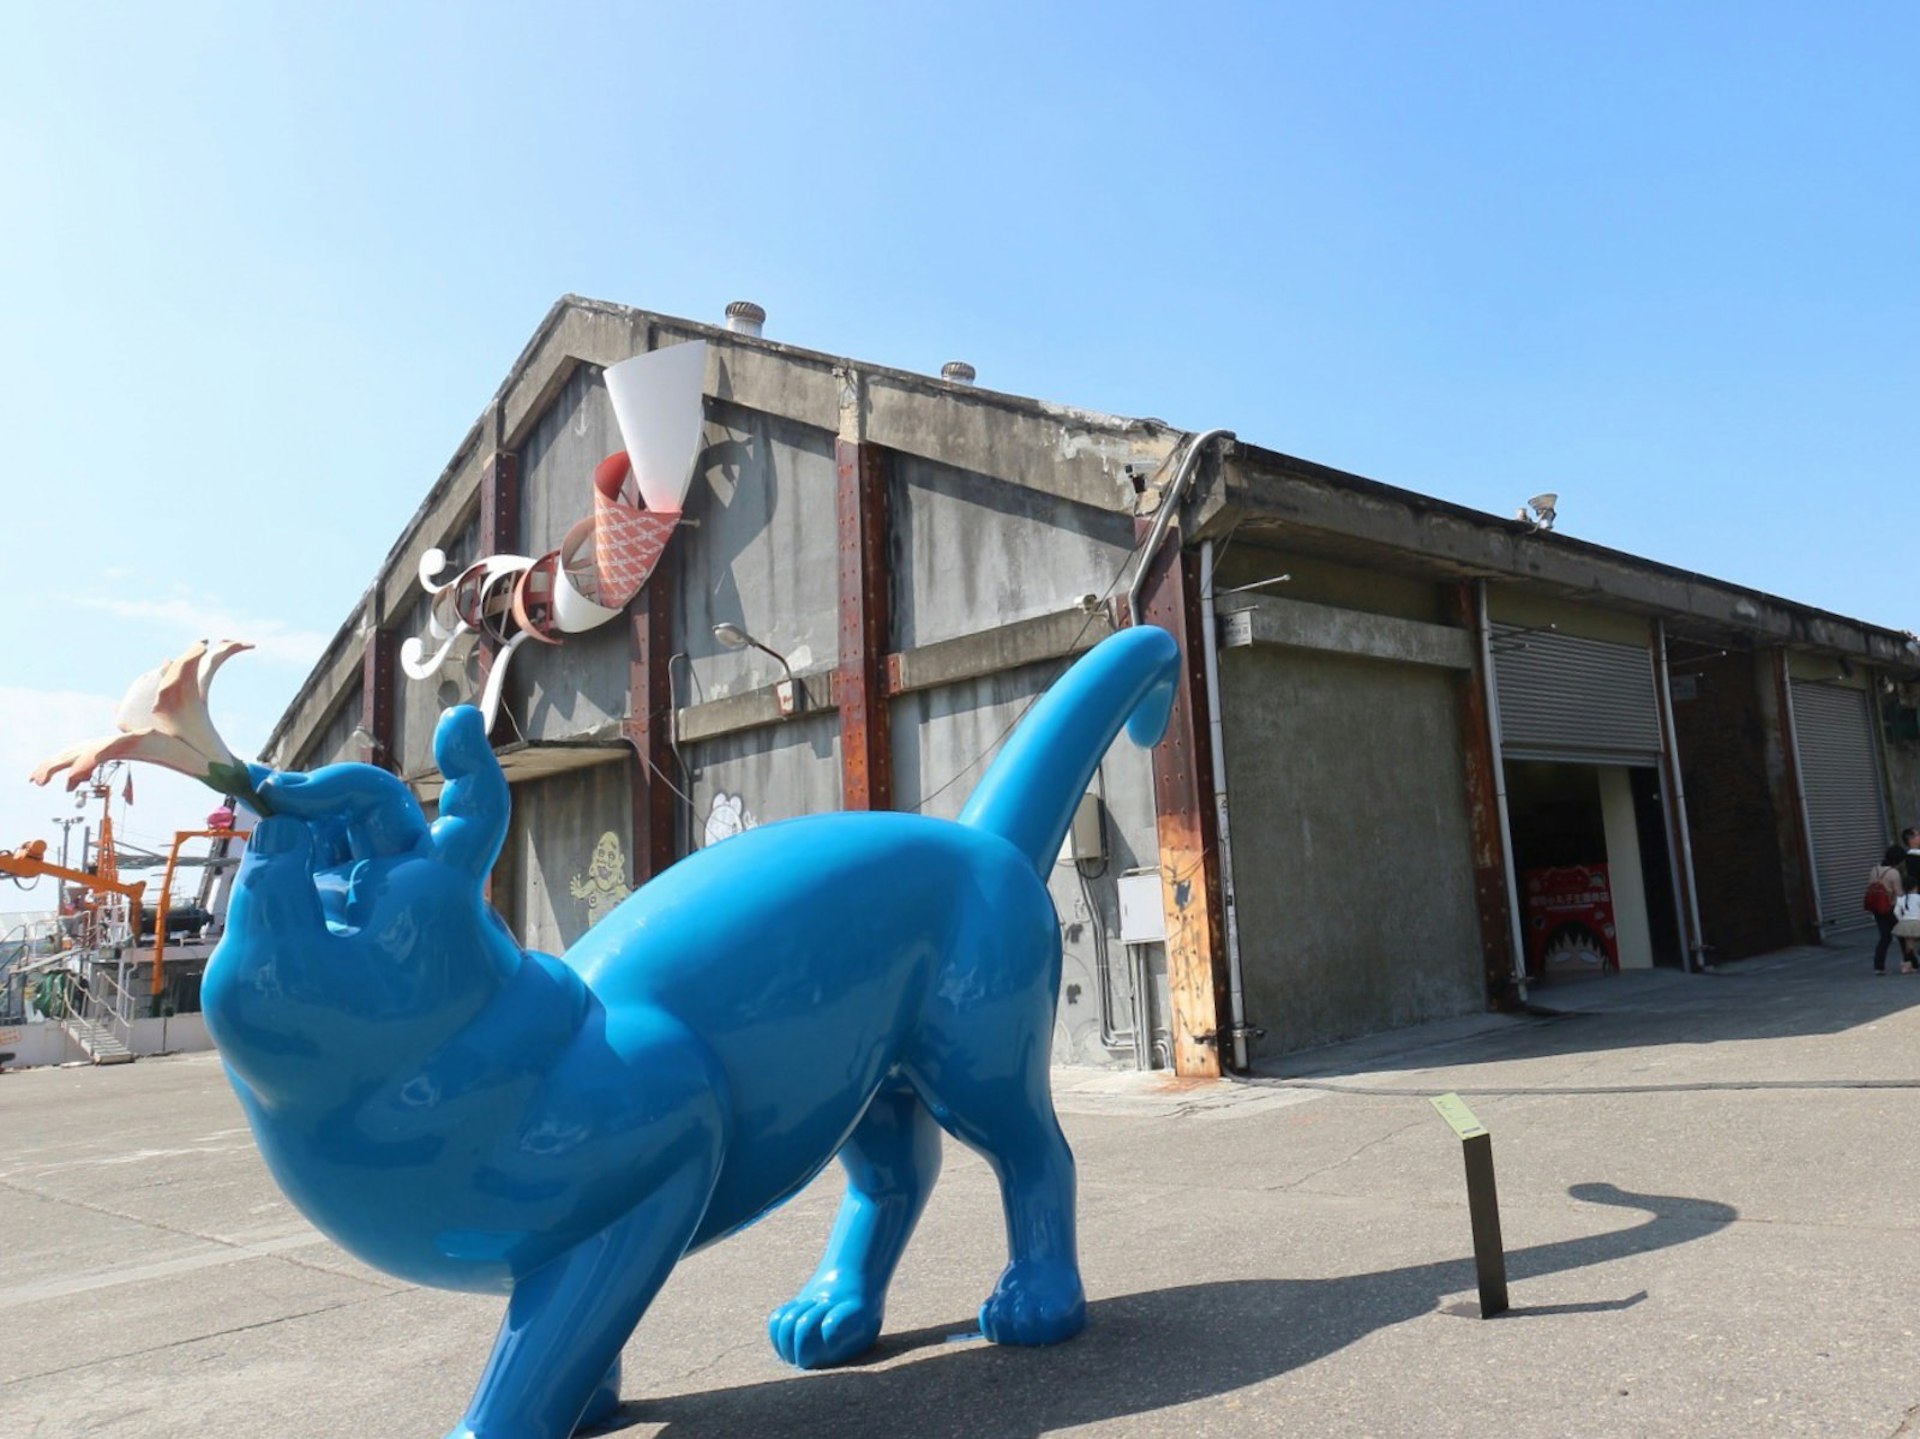 Odd Pop Art sculptures adorn the grounds at Pier-2 Art District © Piera Chen / Lonely Planet